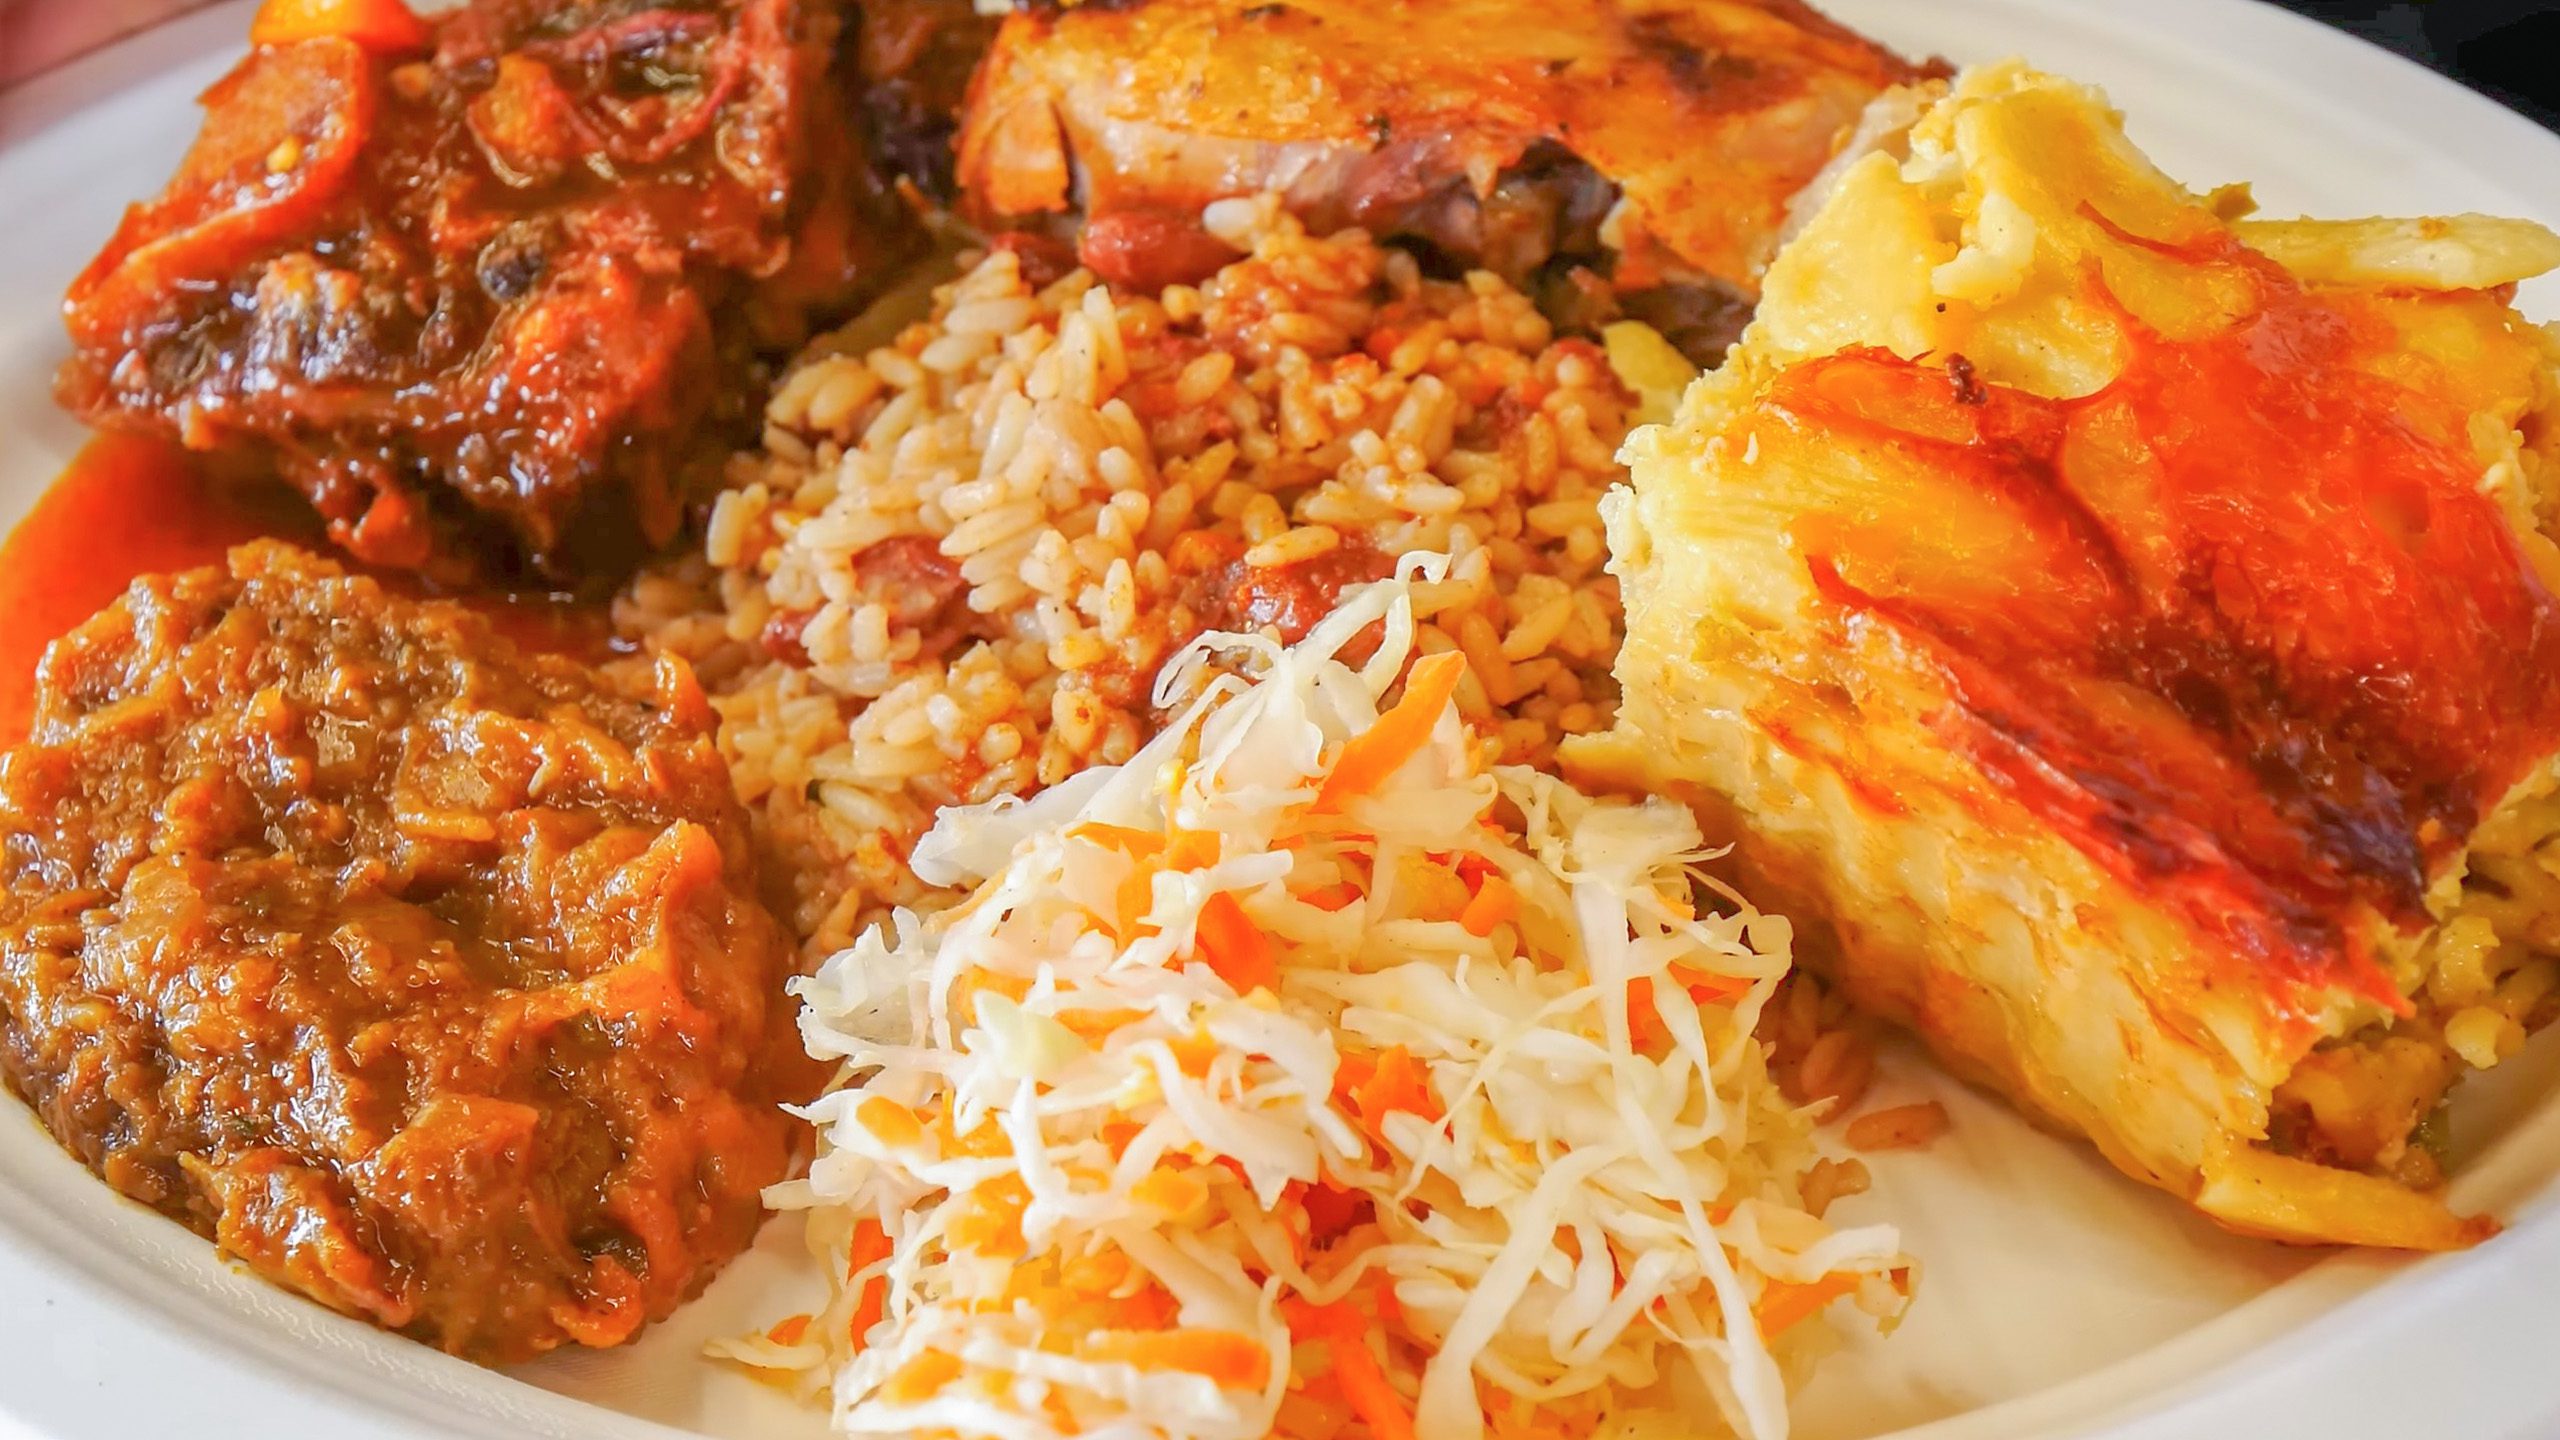 A plate of Haitian food at Naomi's Garden | Davidsbeenhere